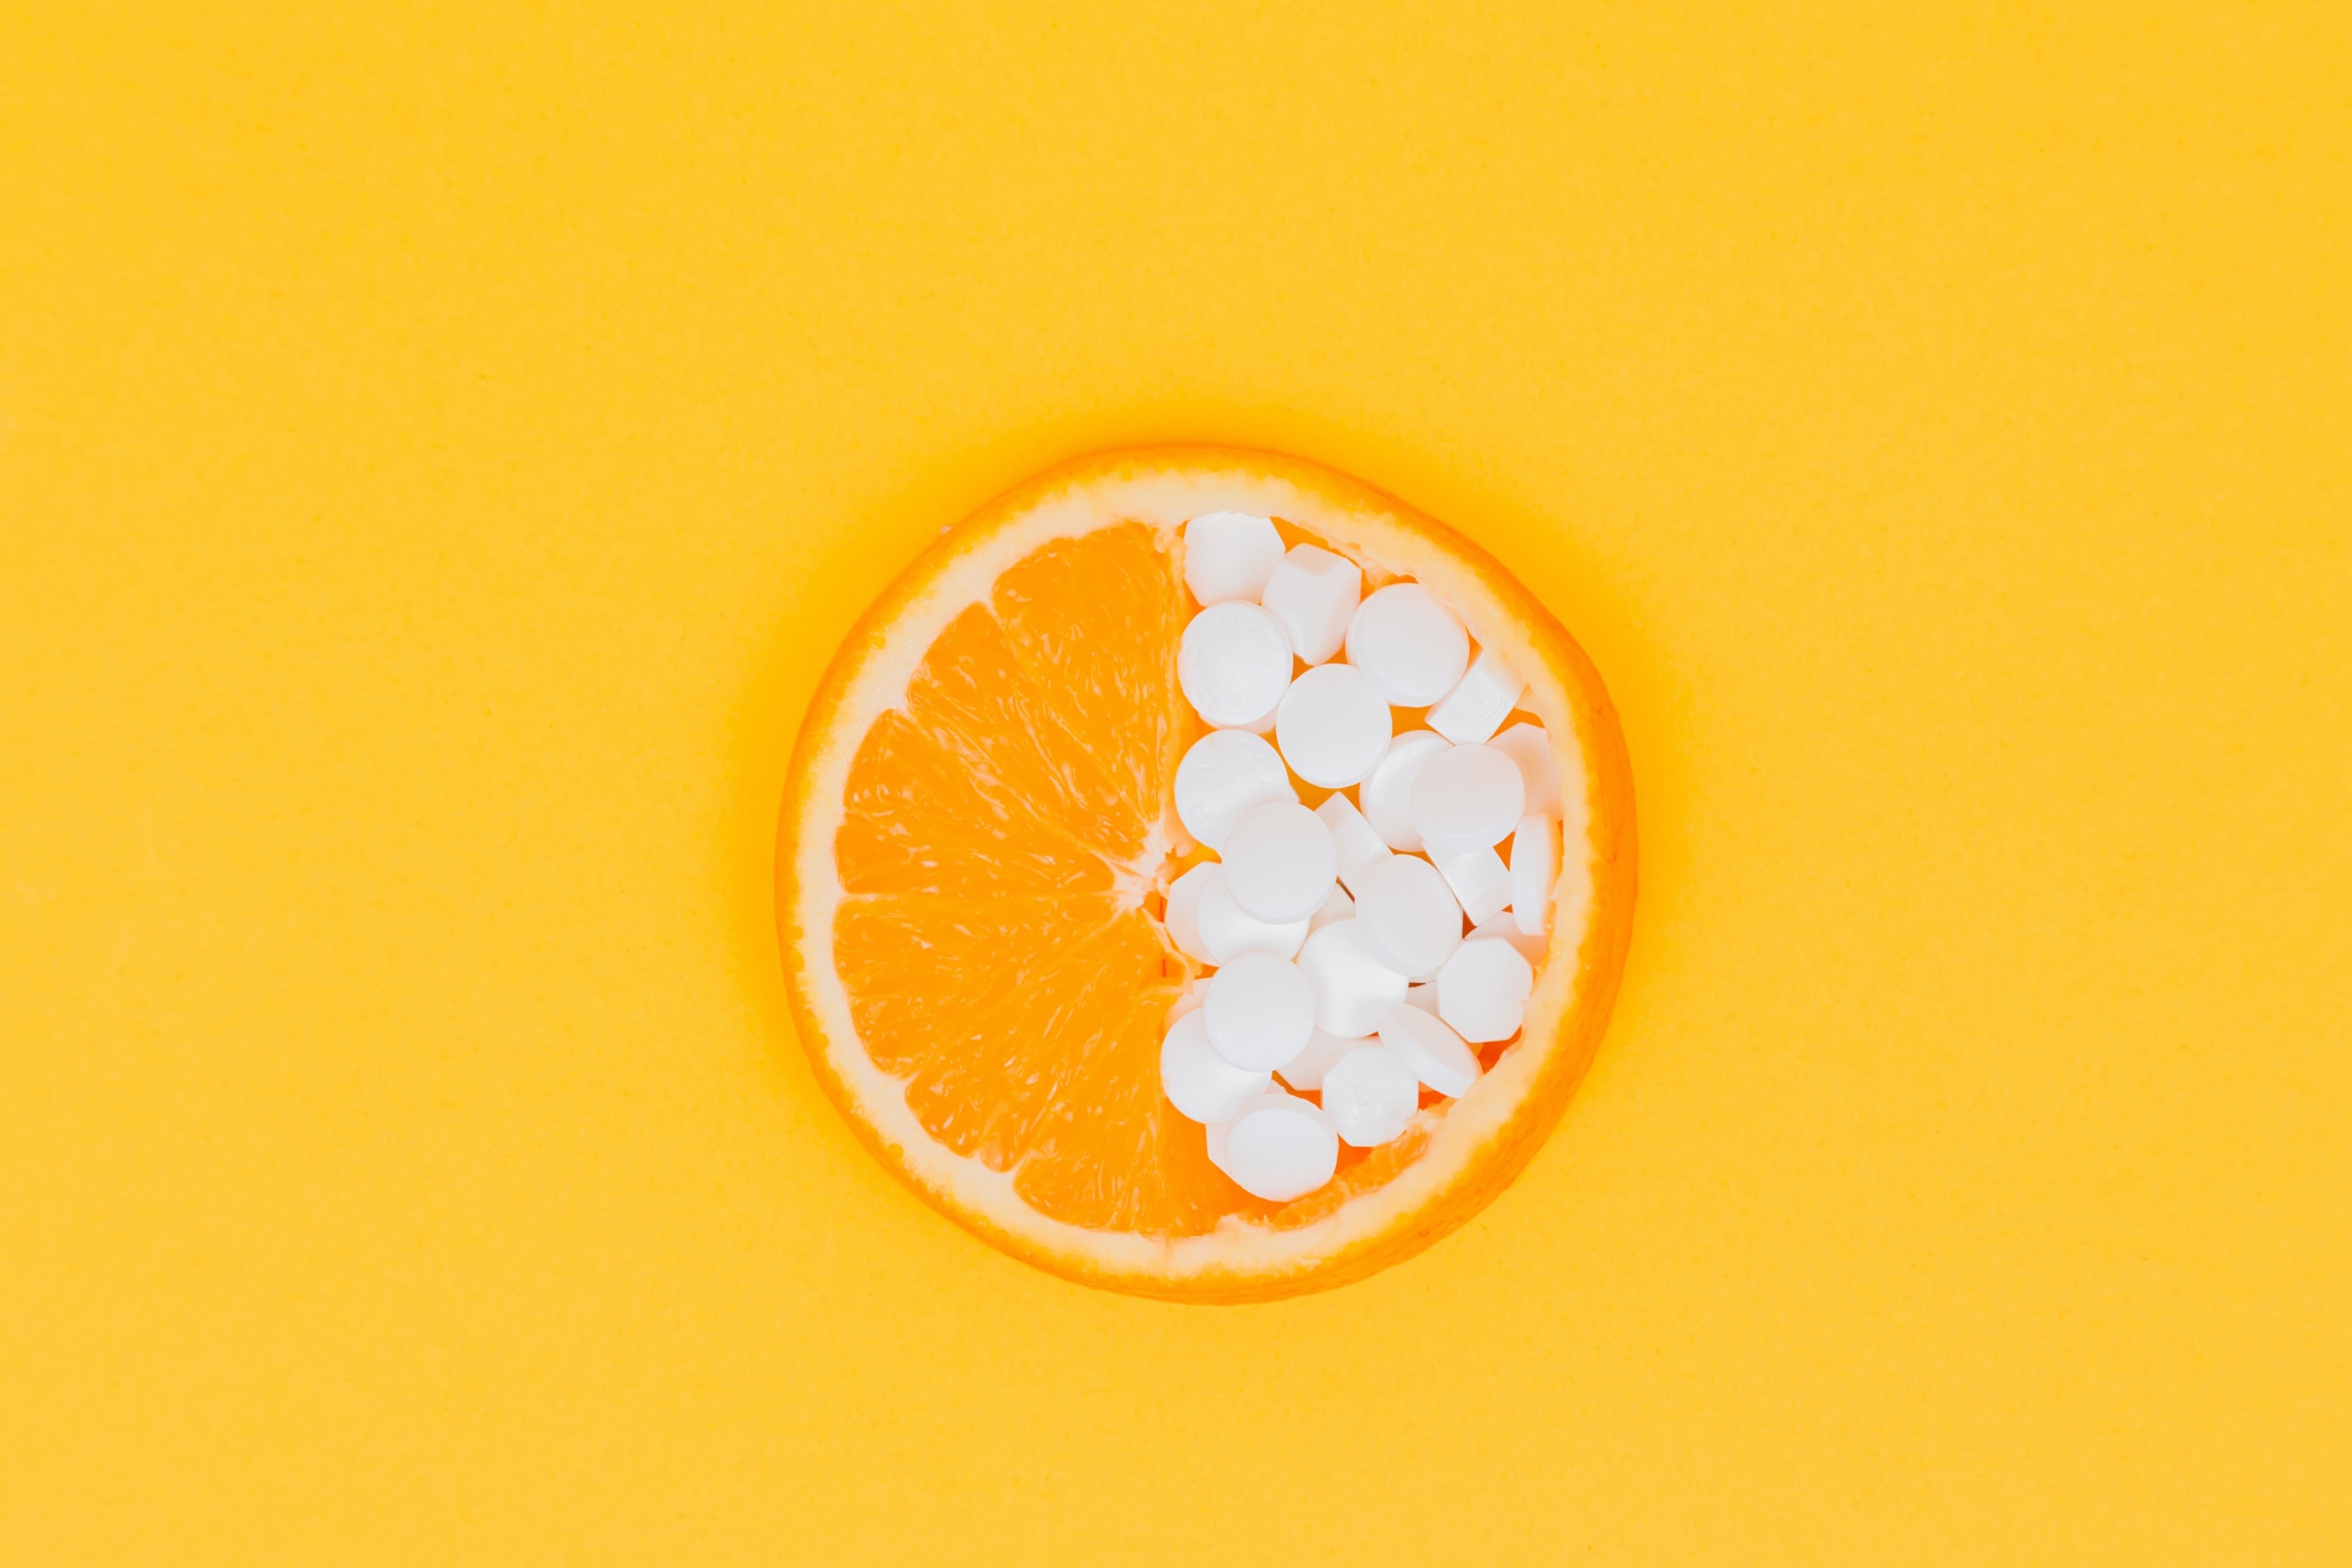 Vitamin pills and orange